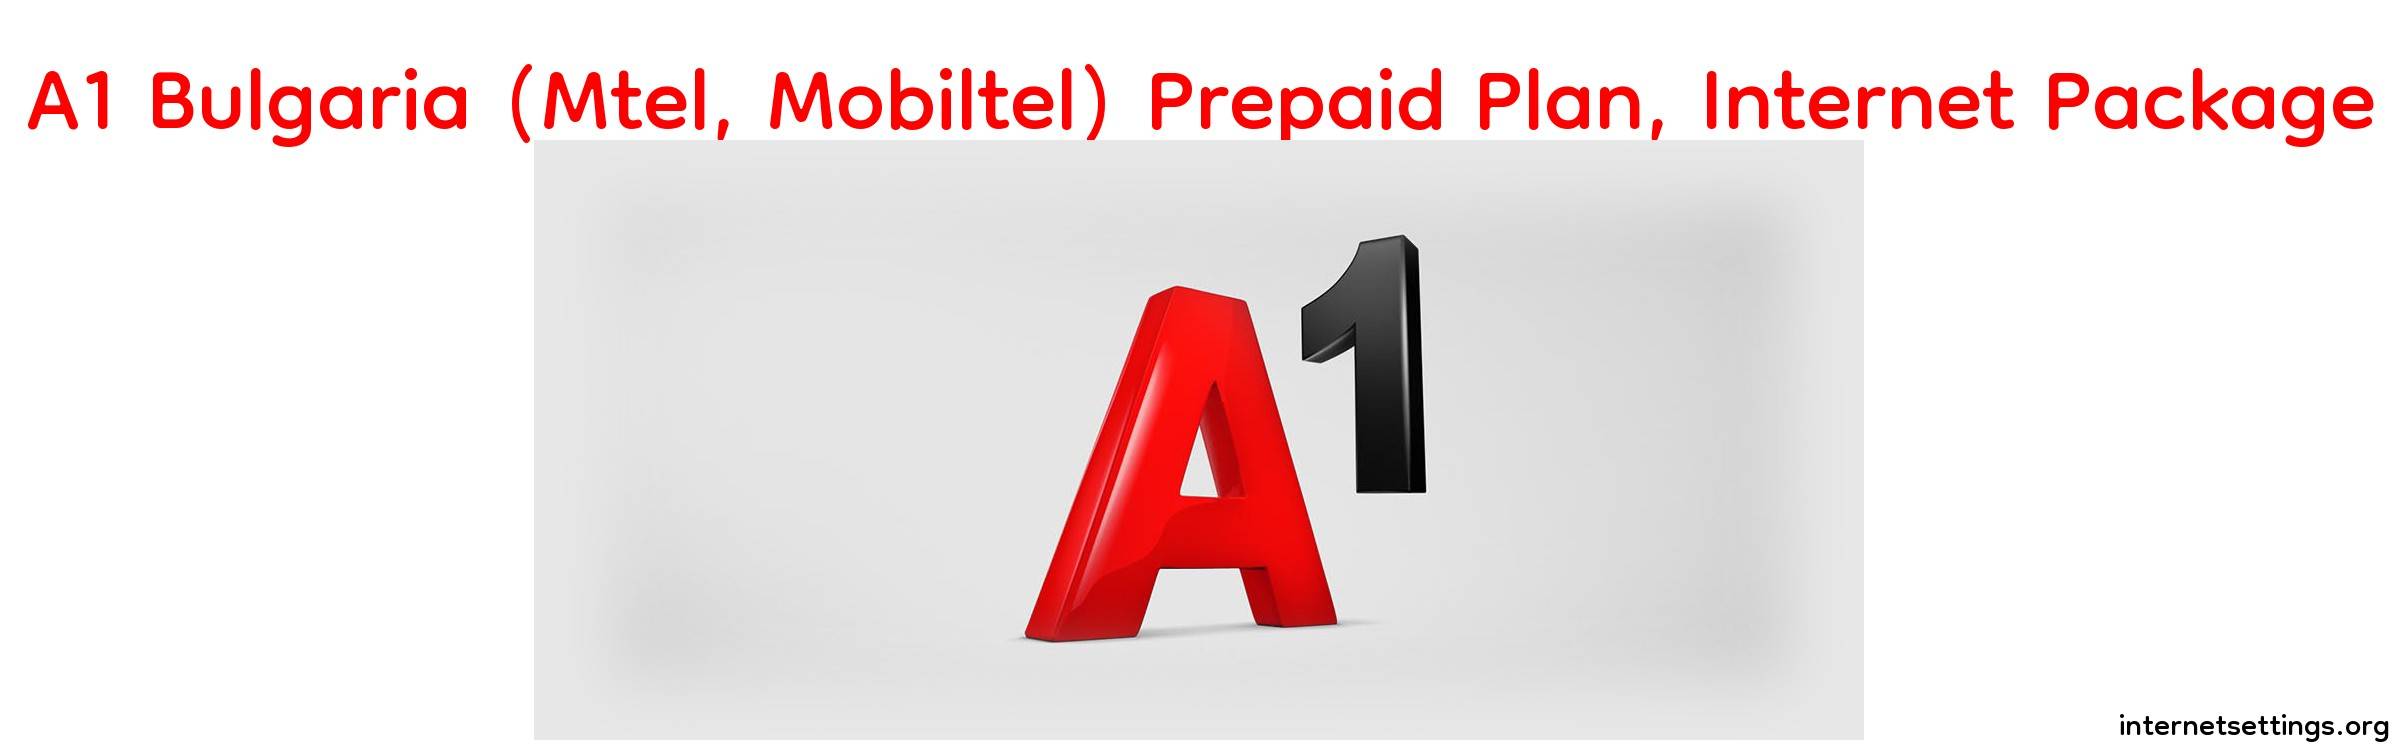 A1 Bulgaria (Mtel, Mobiltel) Prepaid Plan Internet Package